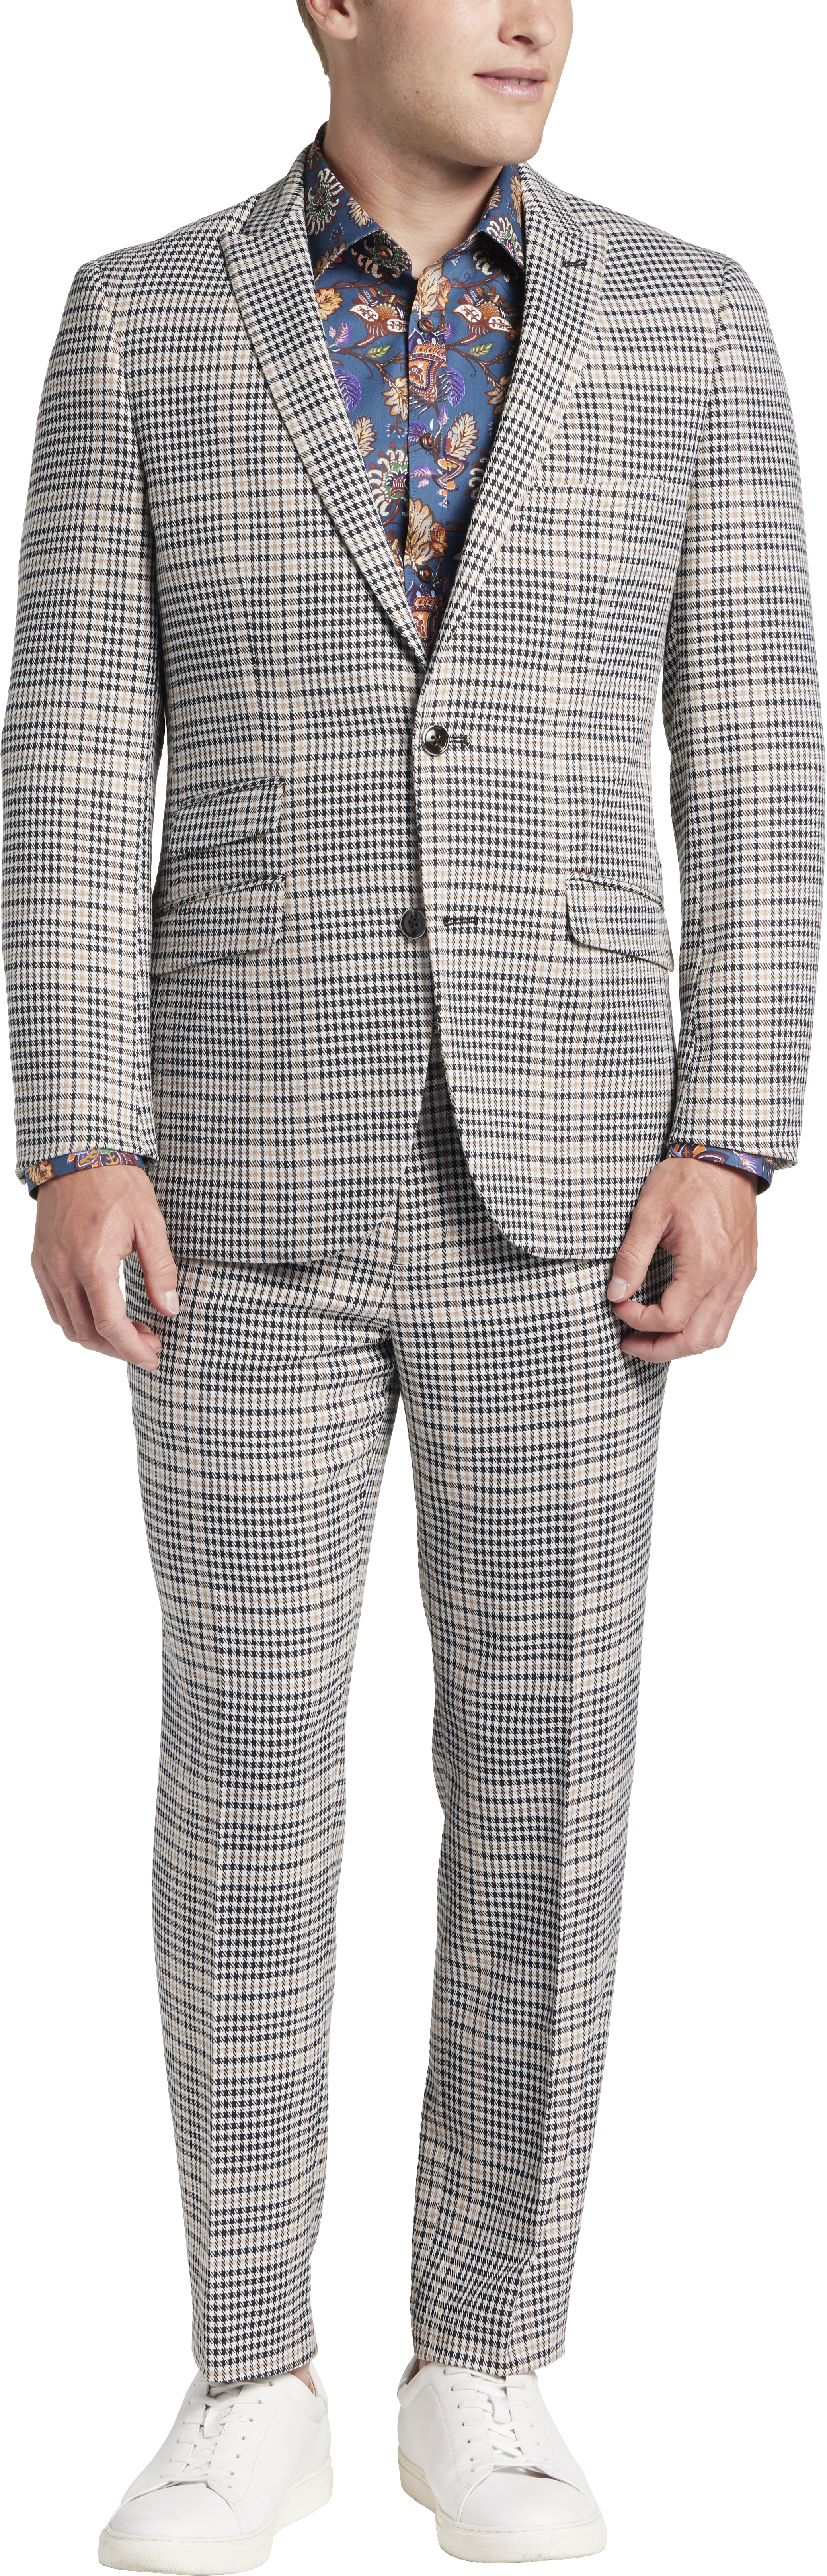 Slim Fit Peak Lapel Houndstooth Plaid Suit Separates Jacket